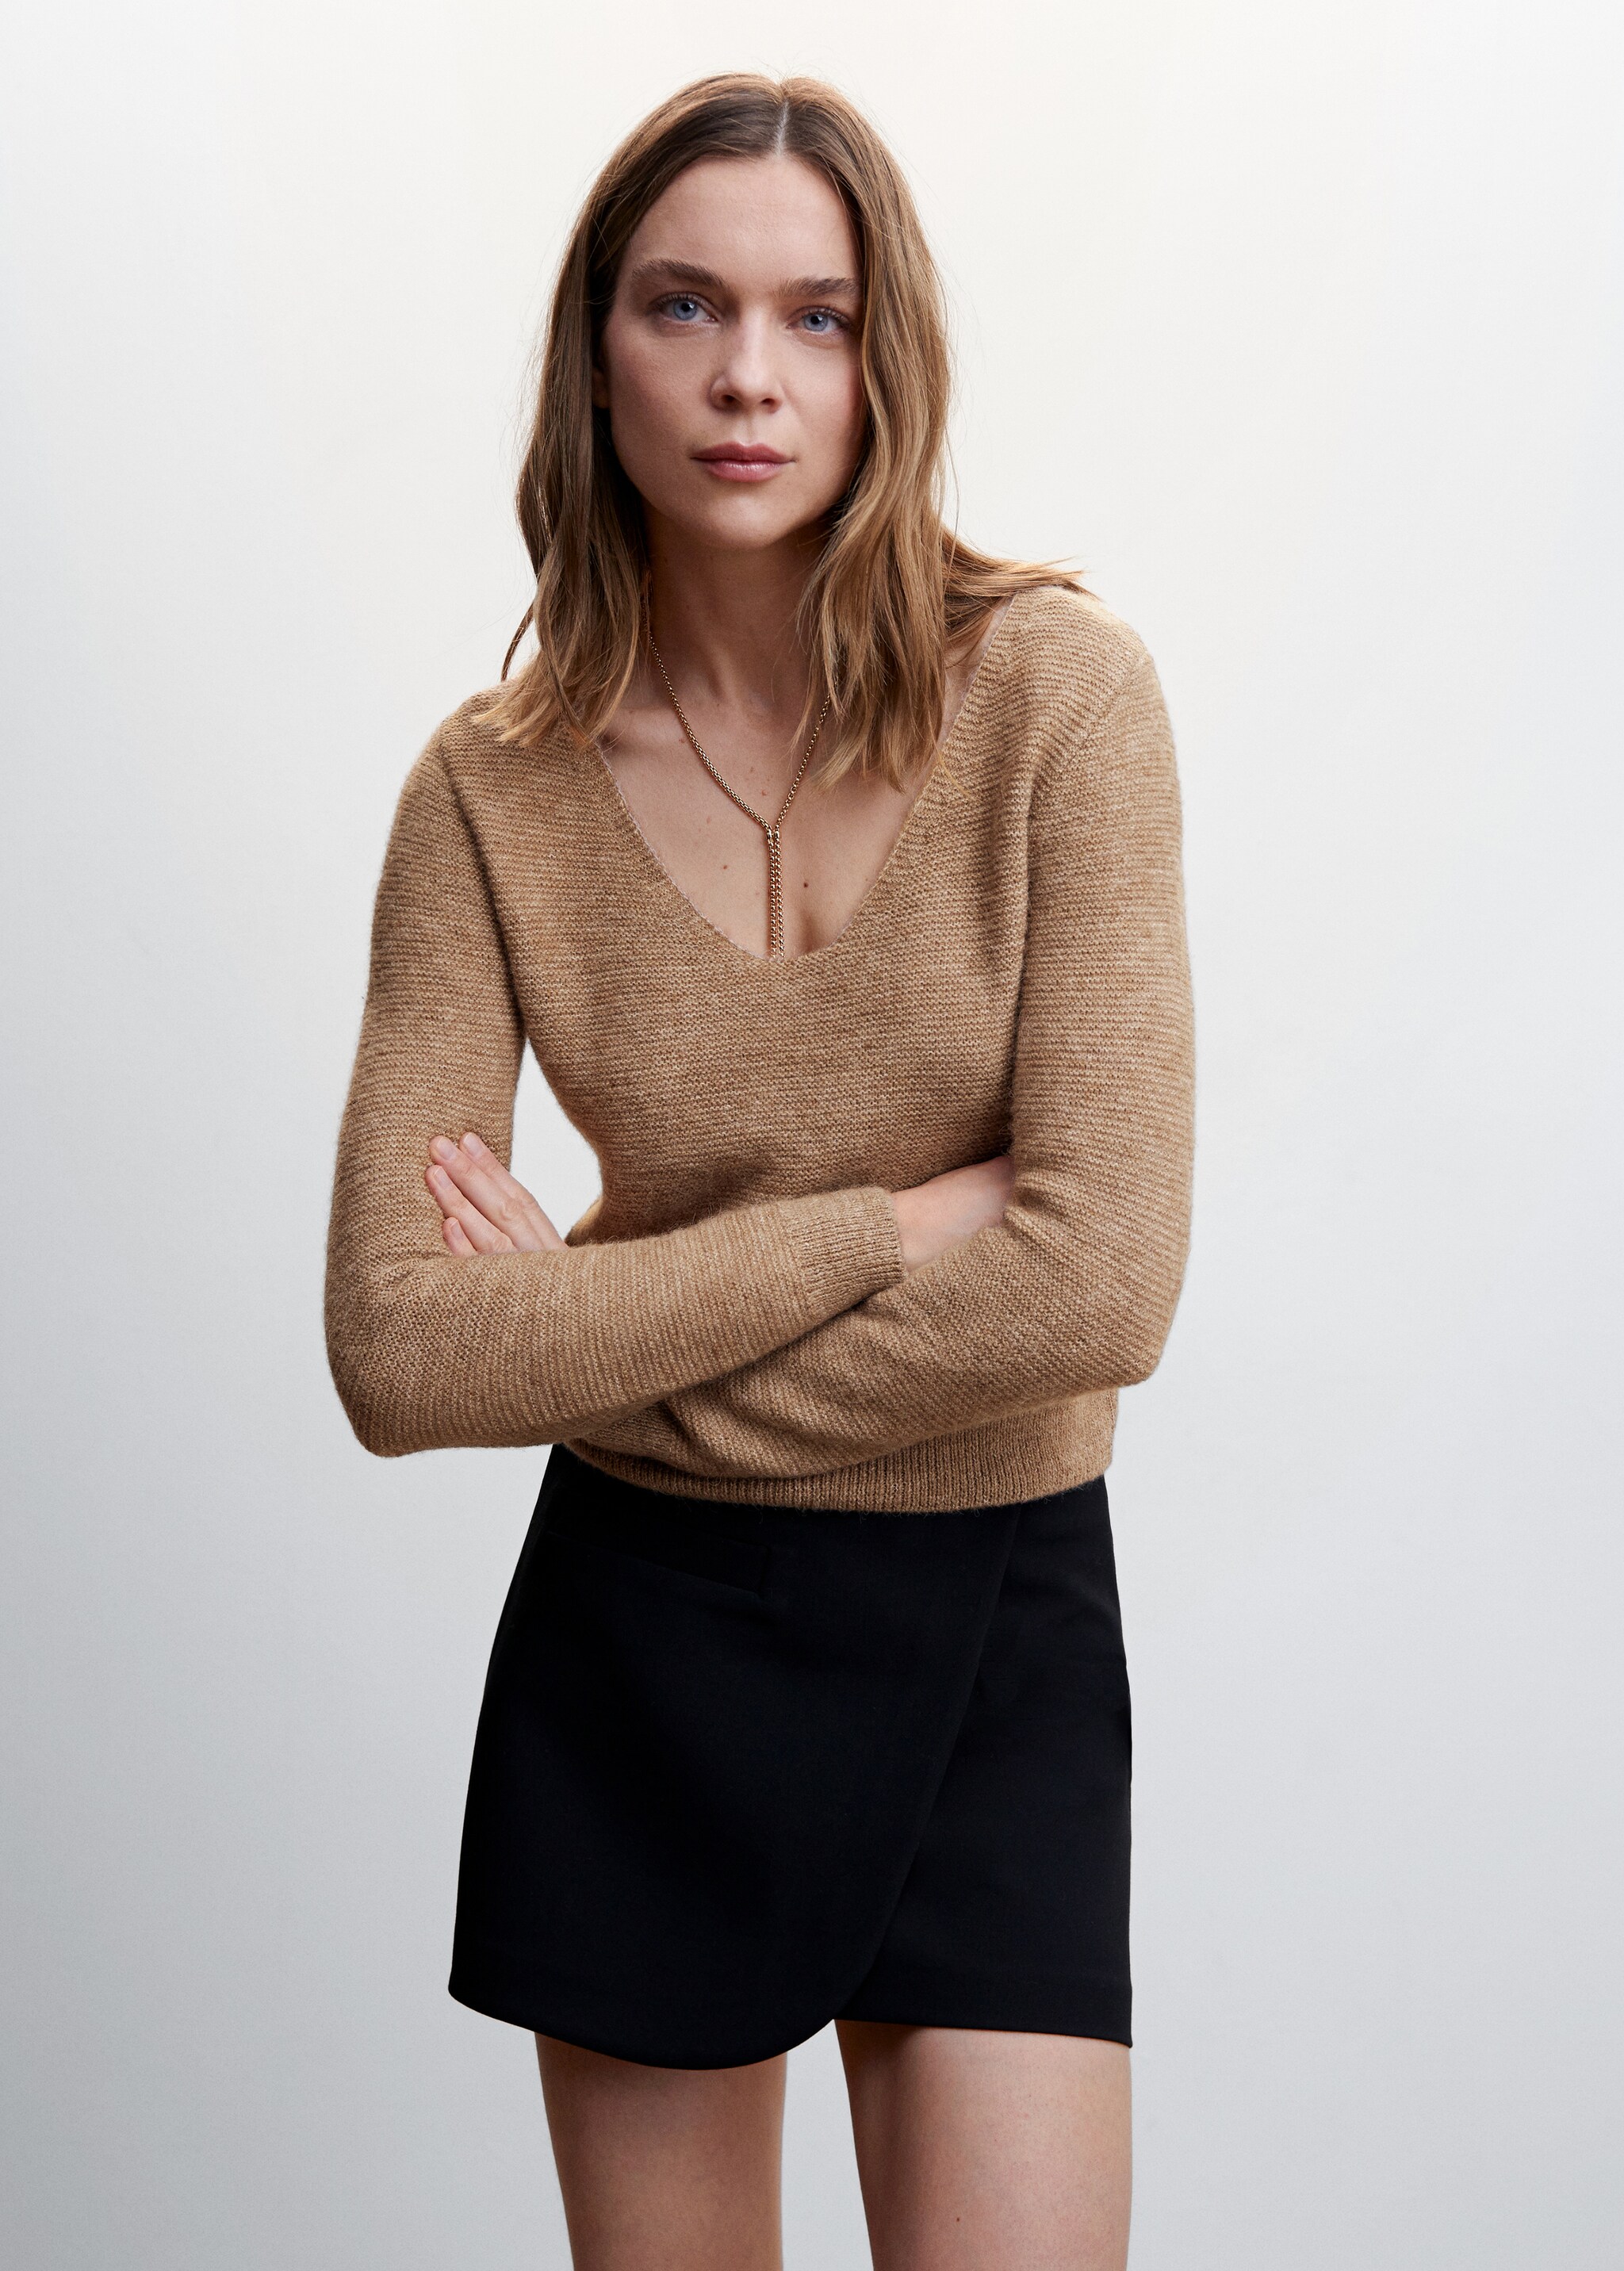 Reverse knit sweater - Medium plane